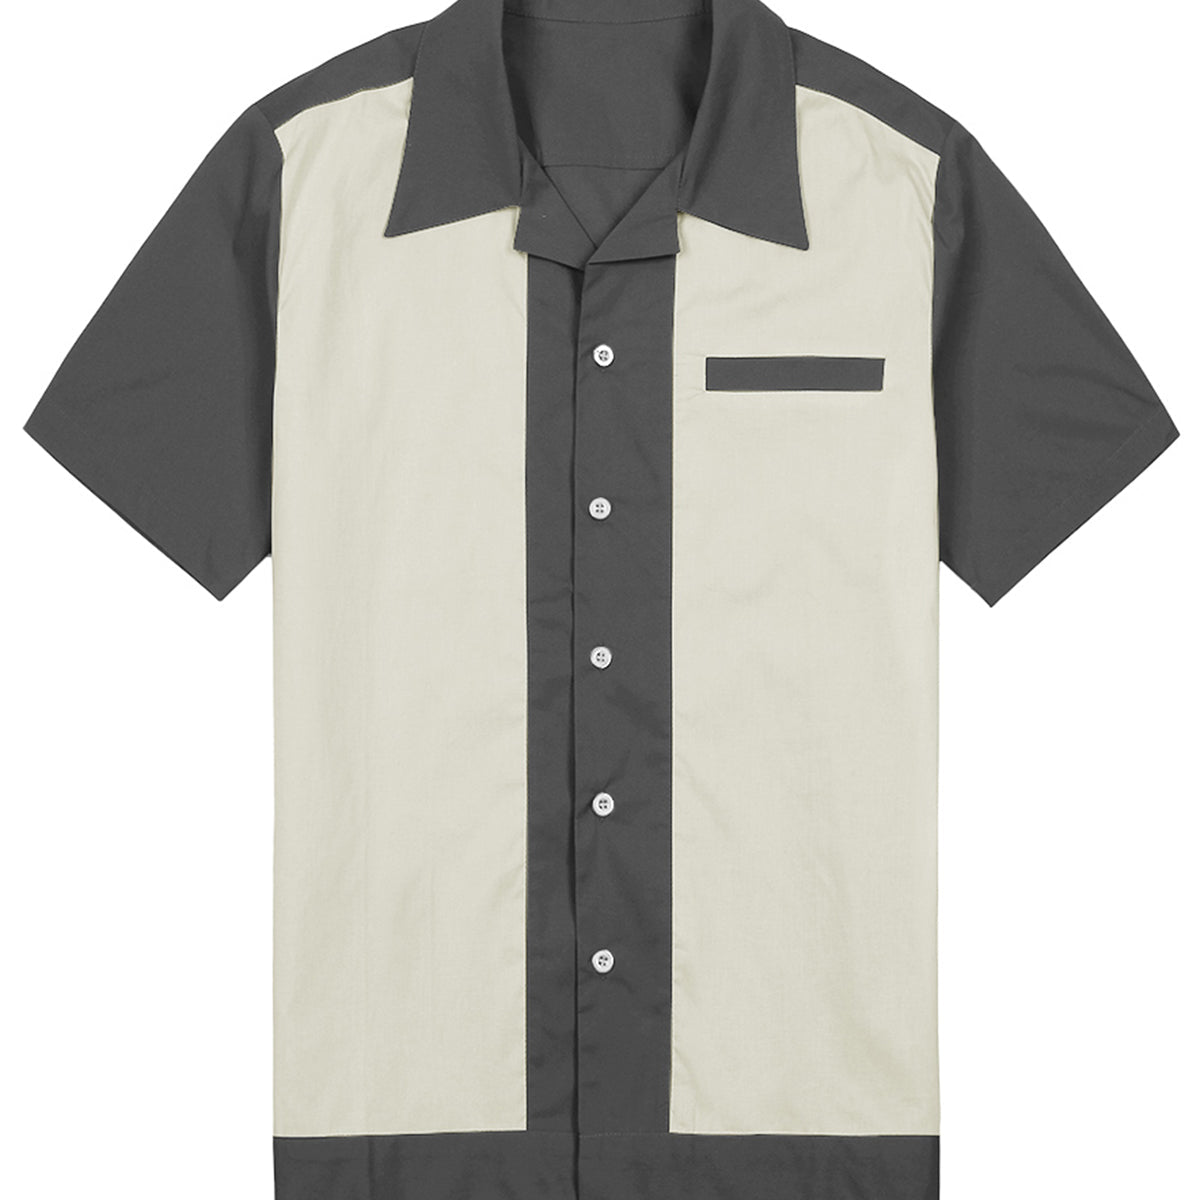 Men's 50's Retro Casual Vintage Camp Bowling Short Sleeve Shirt